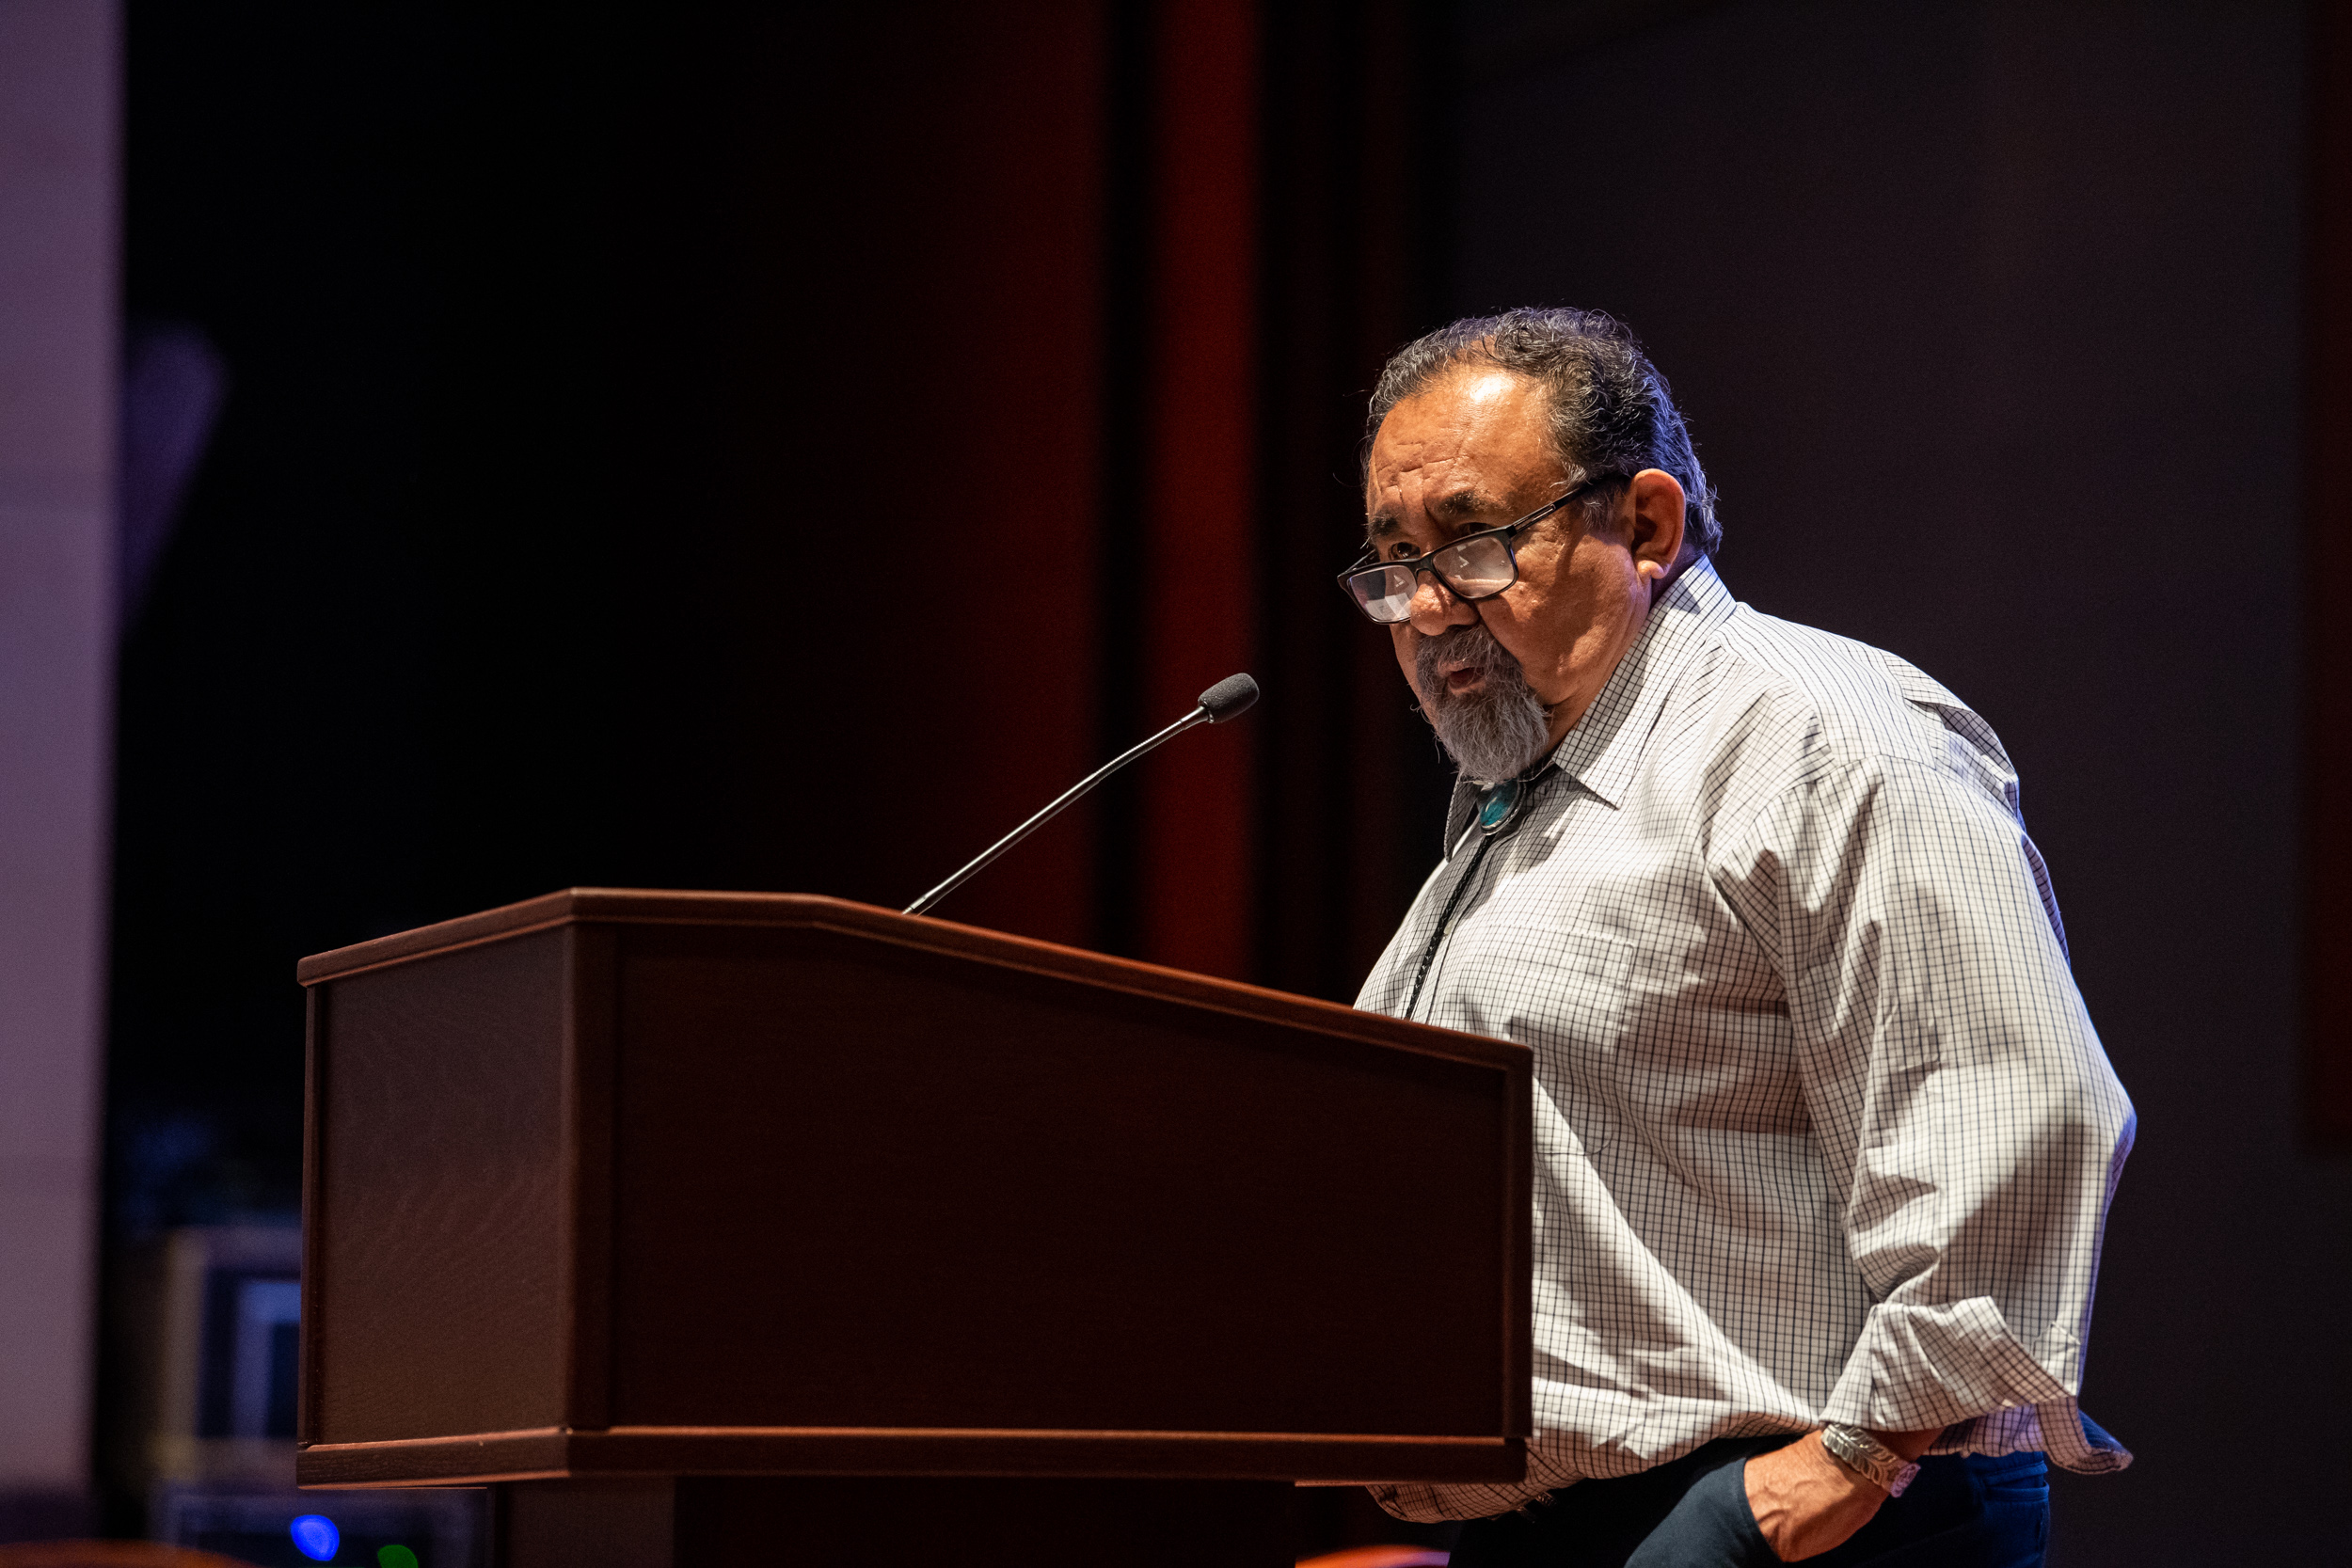 Chair Raul M. Grijalva addresses community leaders at the Environmental Justice Convening on June 26, 2019